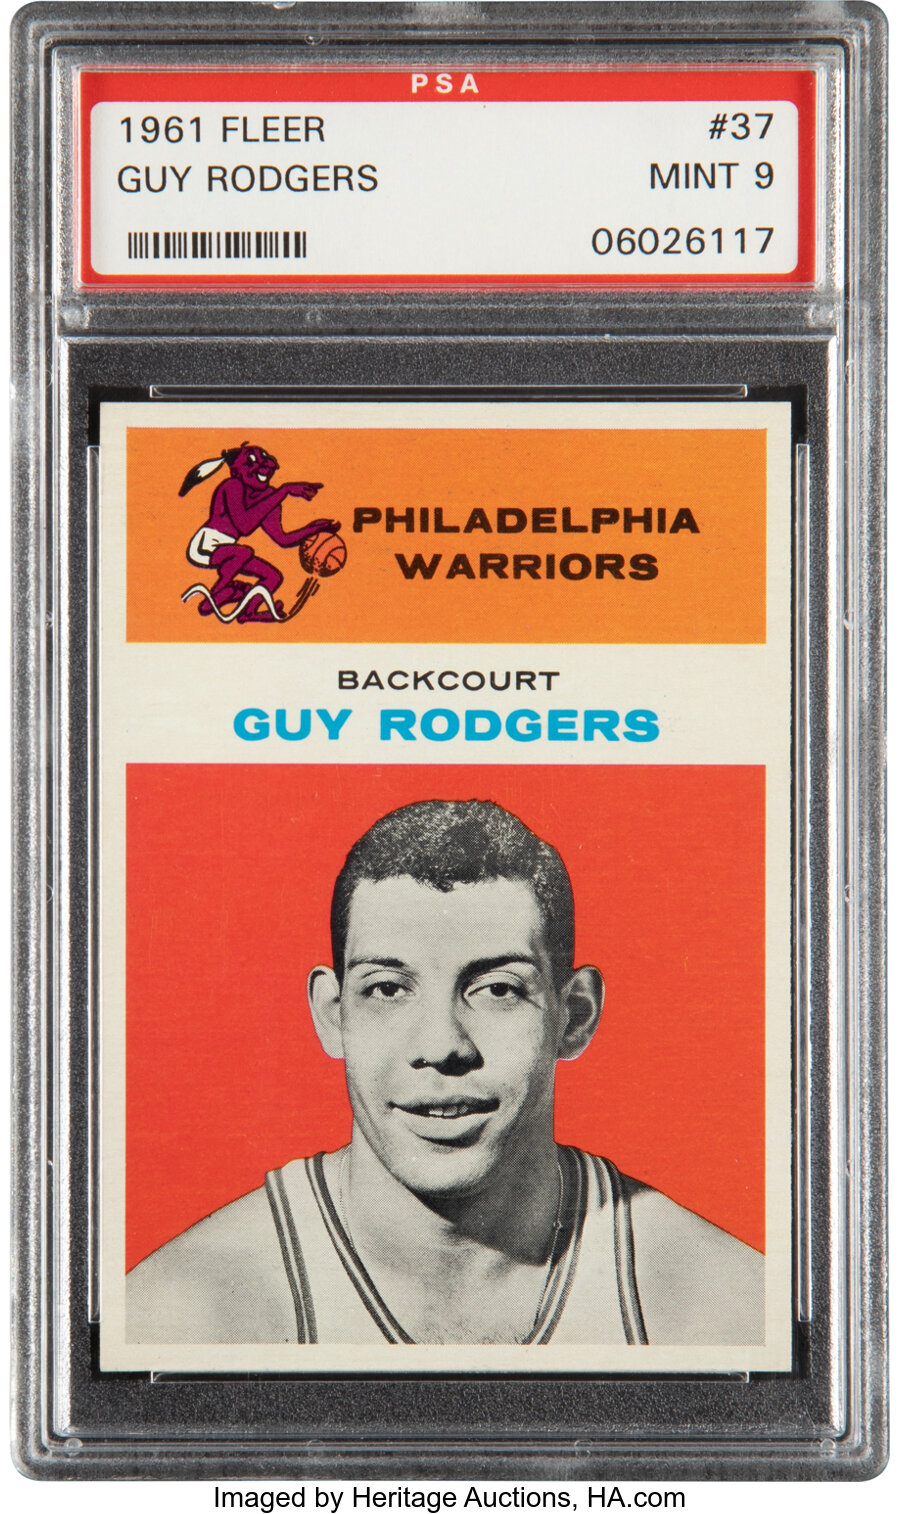 1961 Fleer Guy Rodgers Rookie #37 PSA Mint 9 - Three Higher!